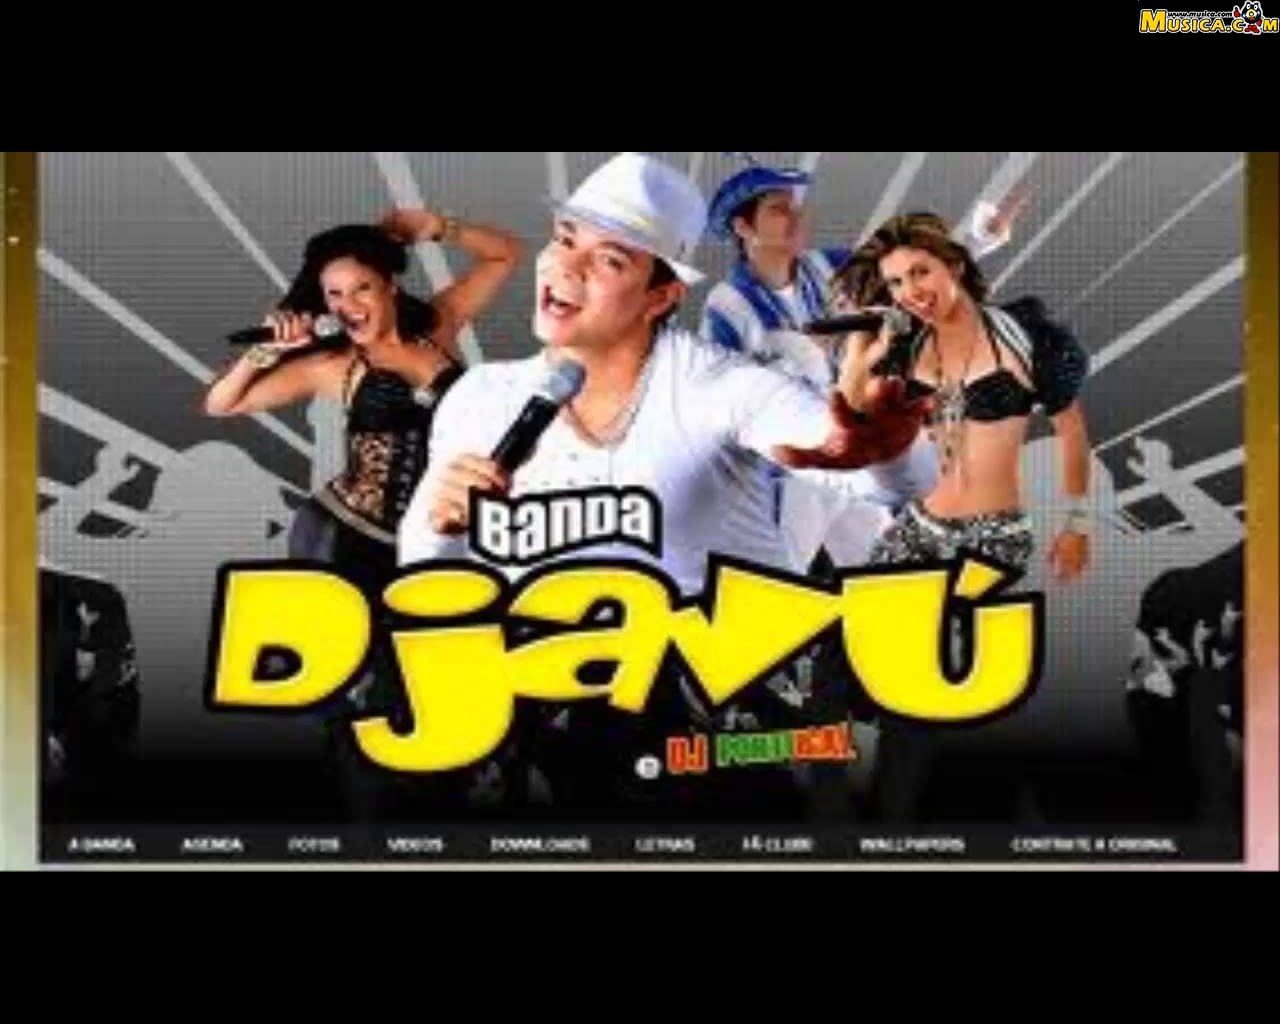 Fondo de pantalla de Banda Djavu